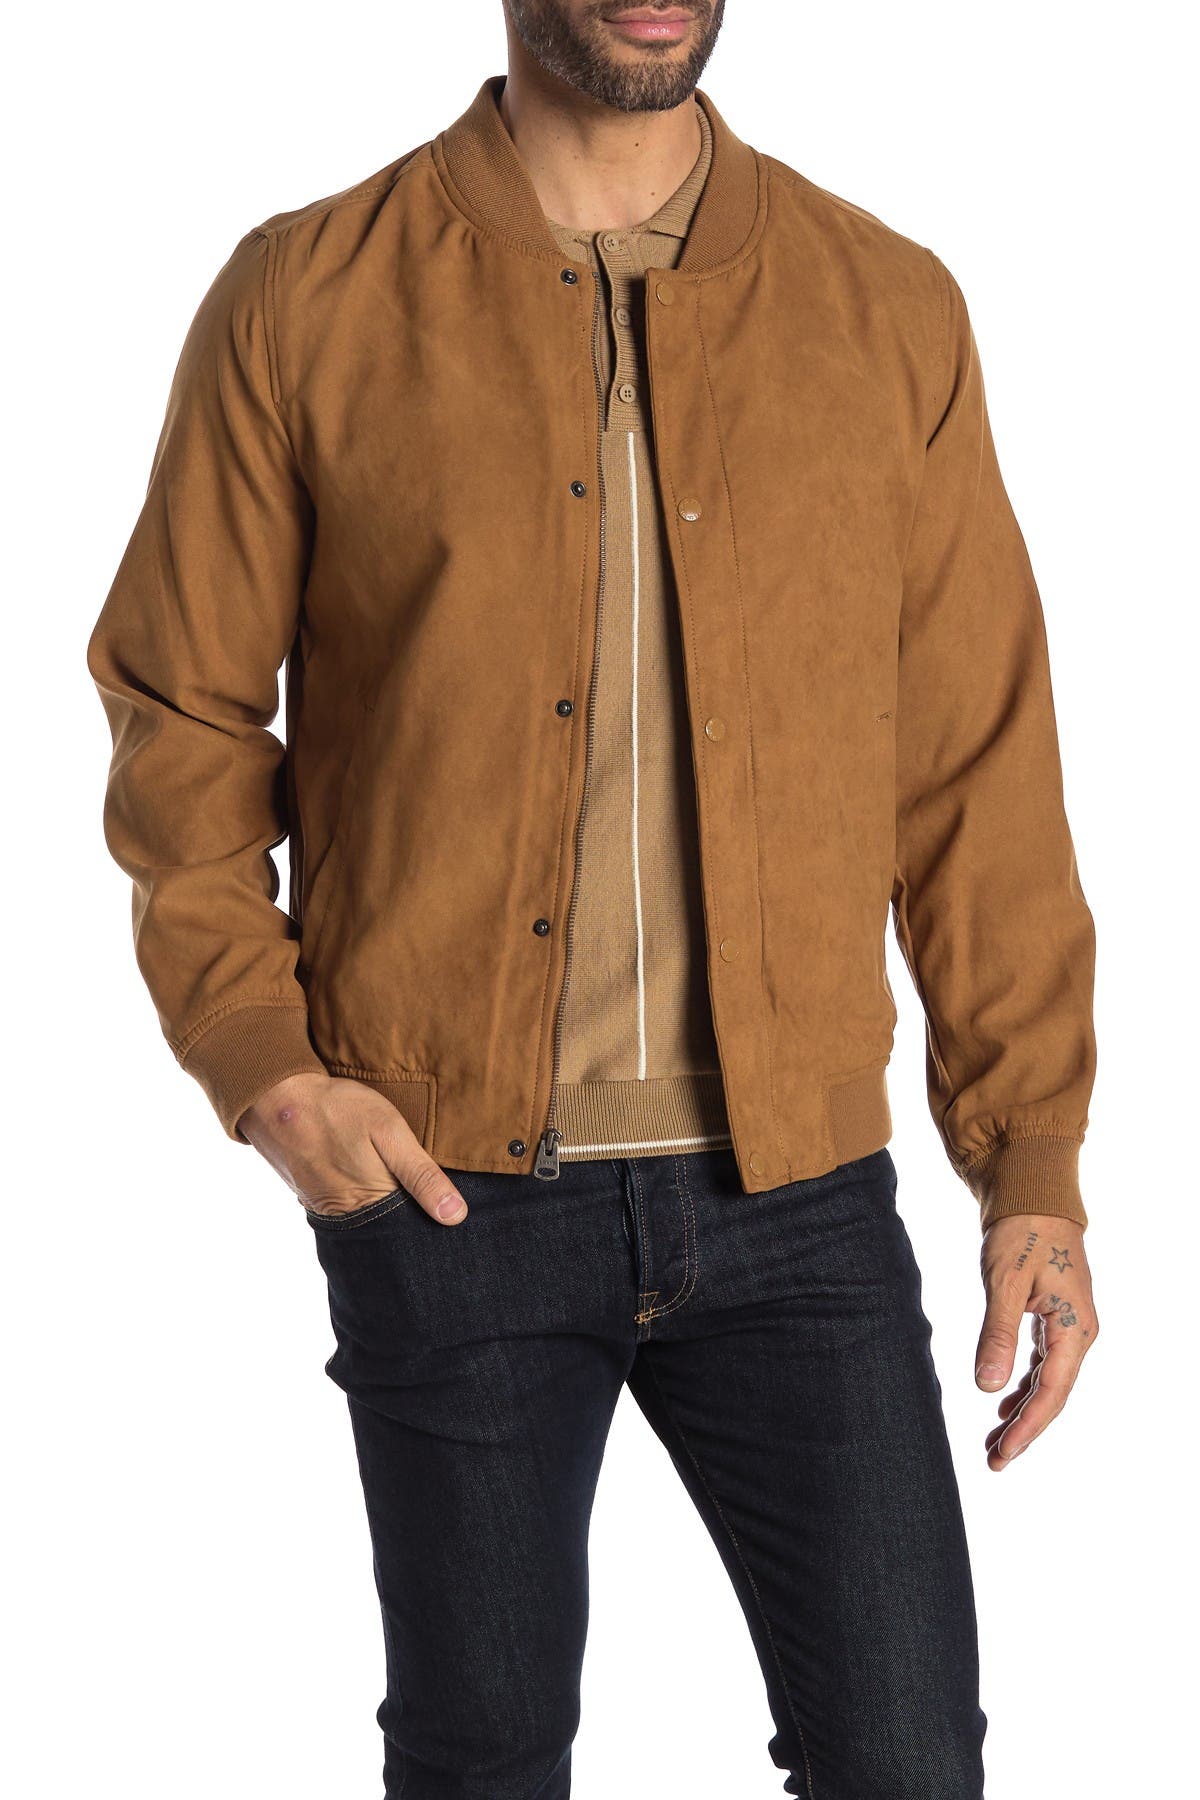 levis leather varsity bomber jacket